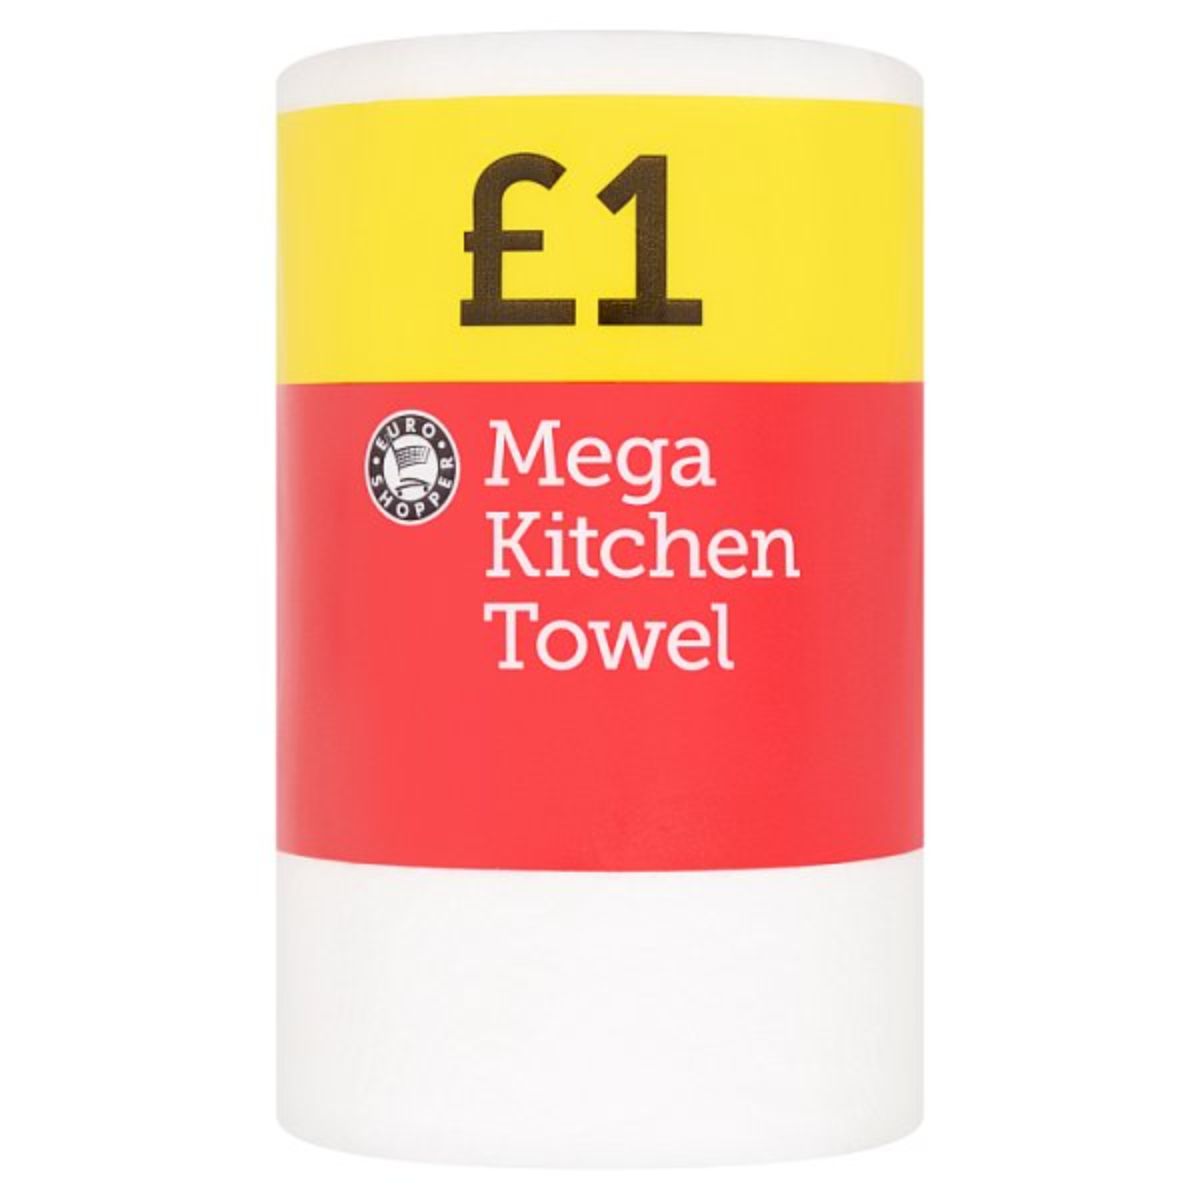 Euro Shopper - Mega Kitchen Towel - 1 Pack - 1 pound.